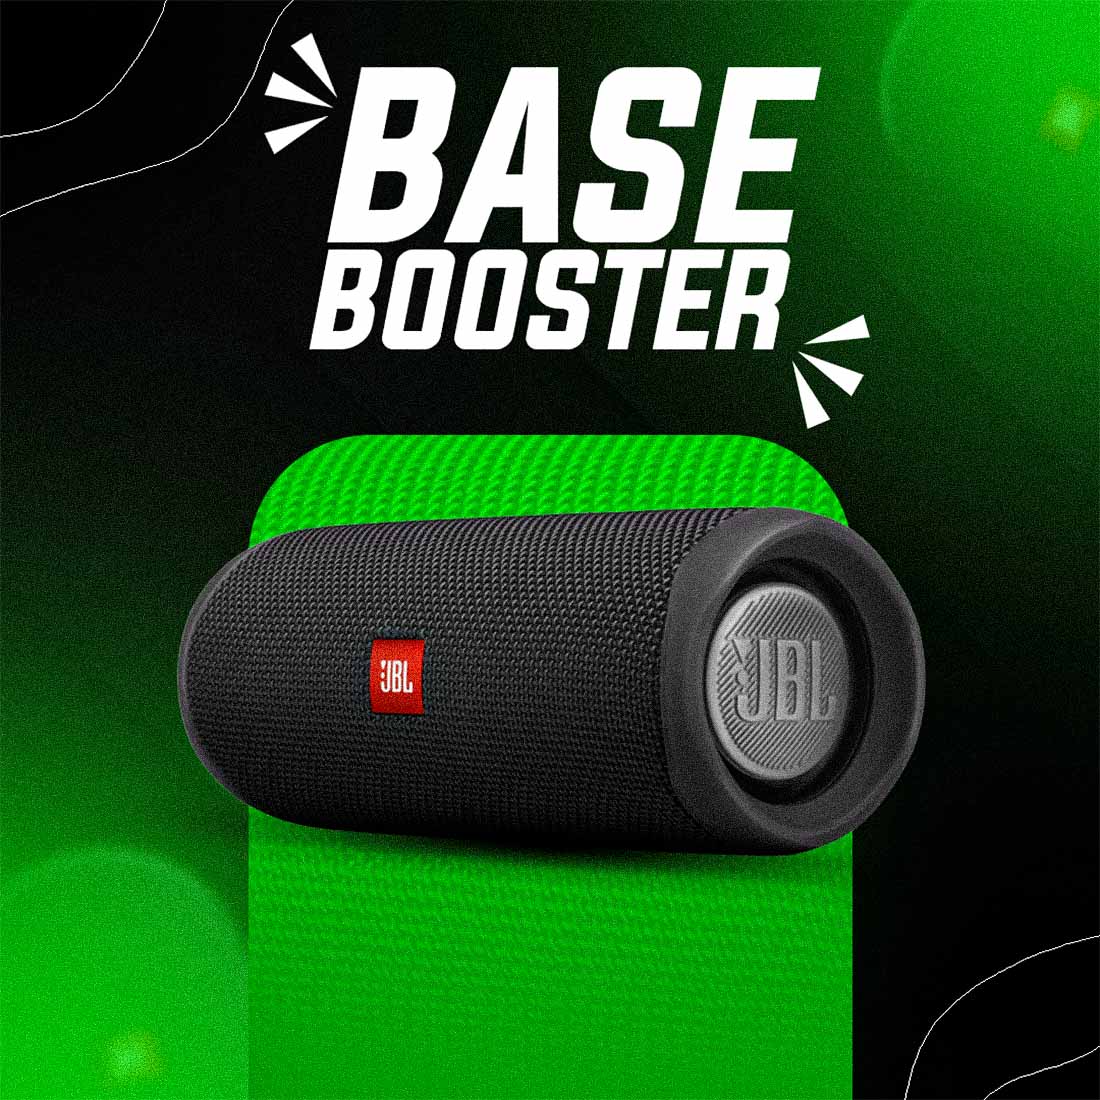 Green Minimalist Speaker Promotion Instagram Post pinterest preview image.